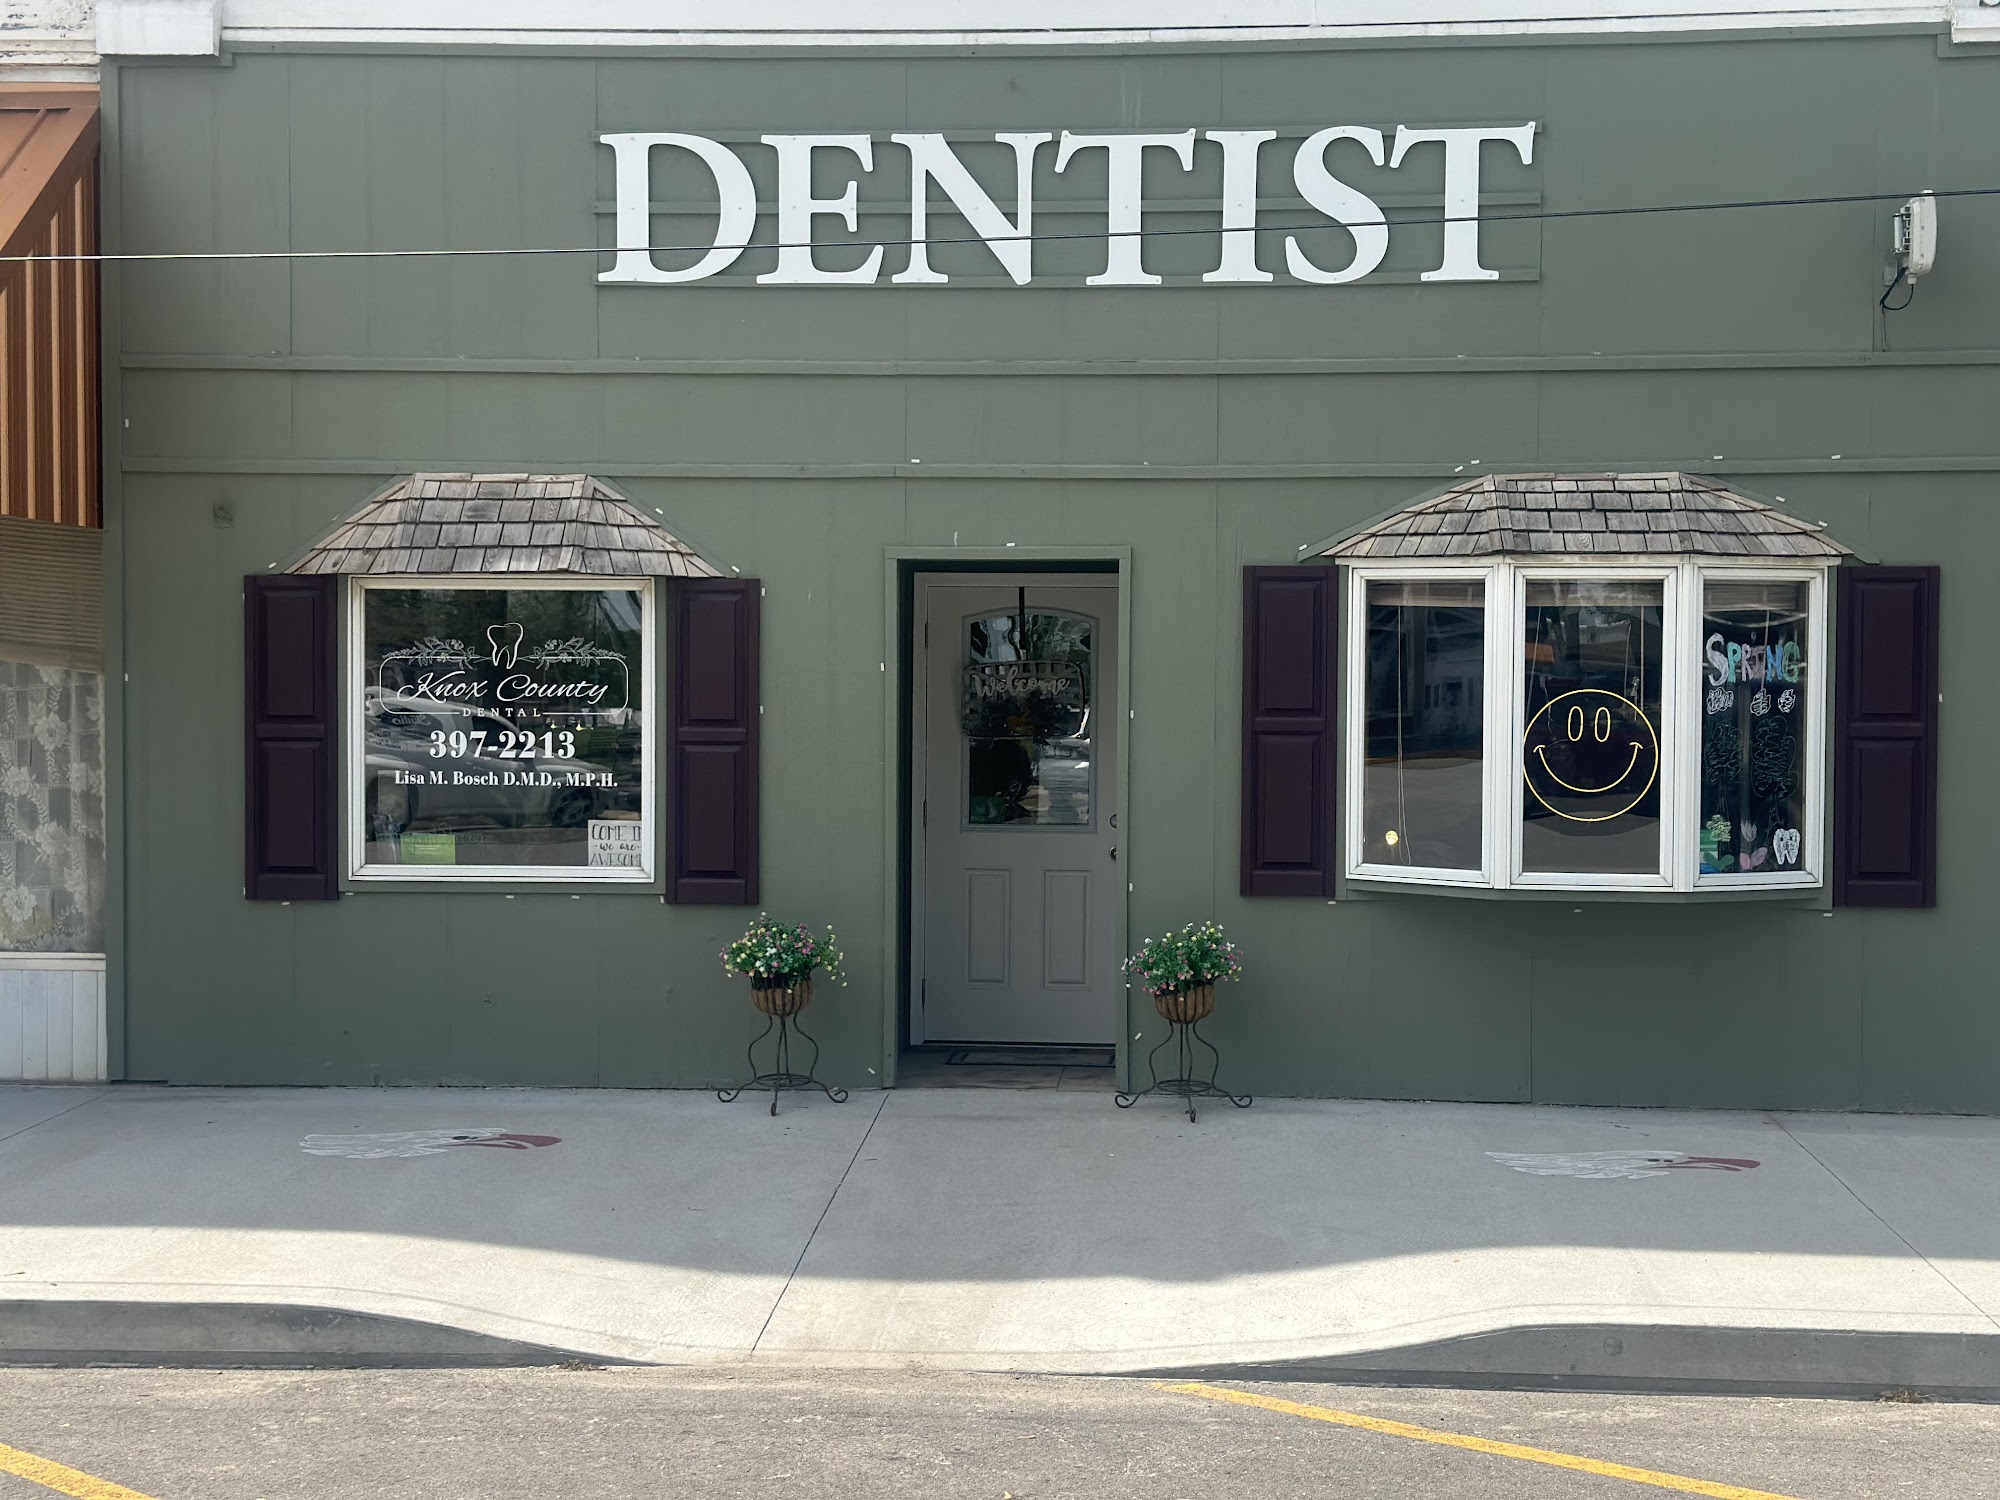 Knox County Dental 107 N Main, Edina Missouri 63537